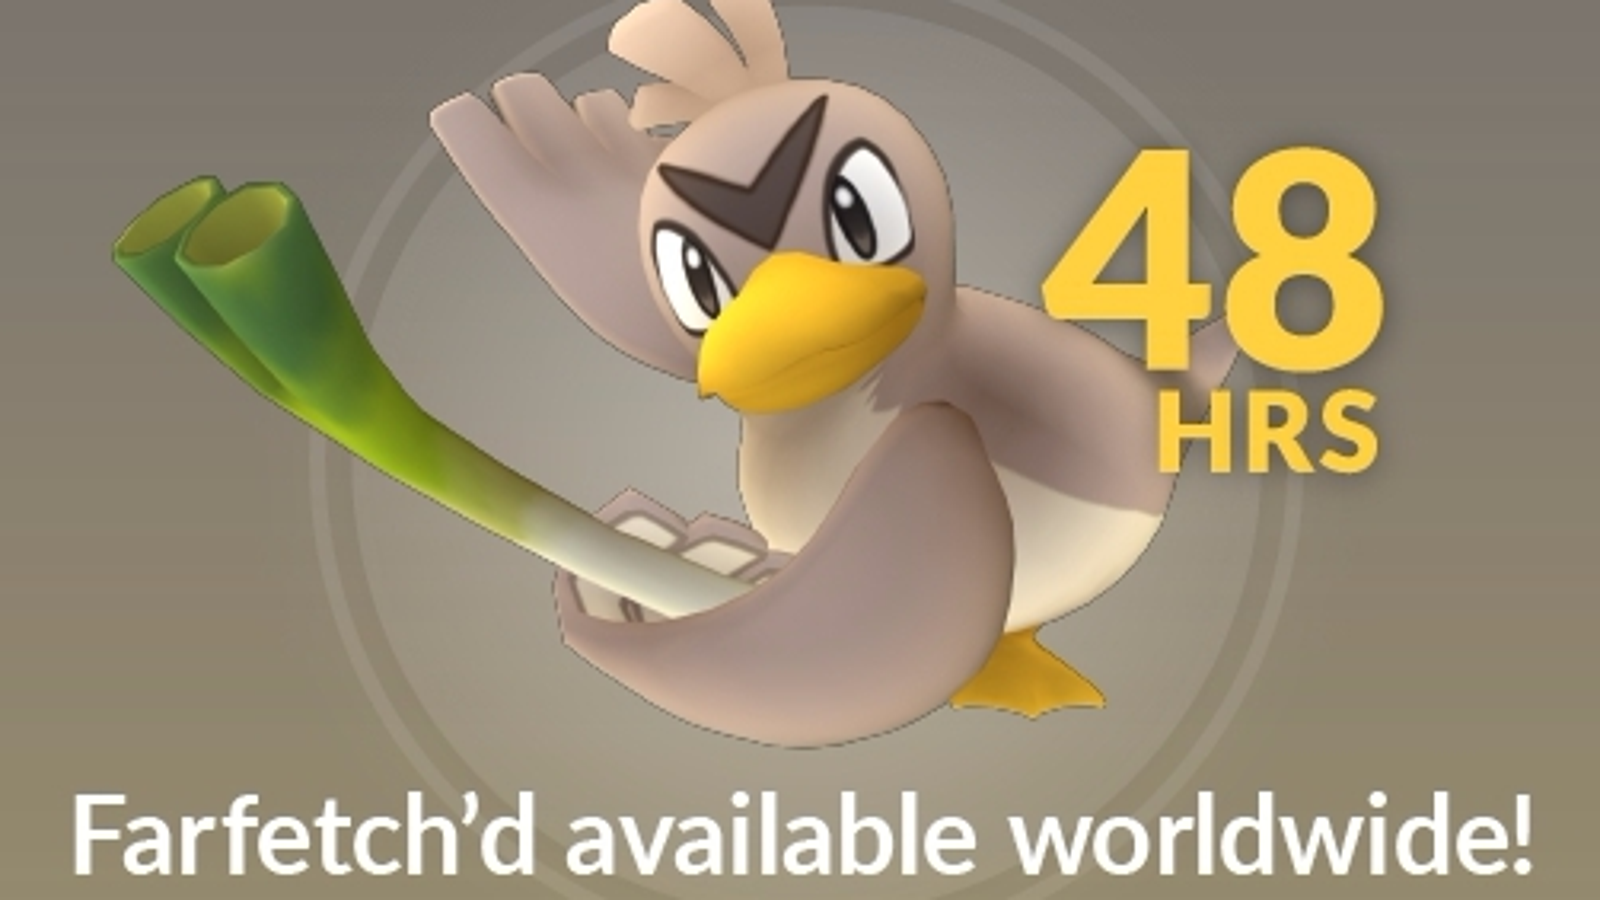 Pokémon Go event to unlock Farfetch'd